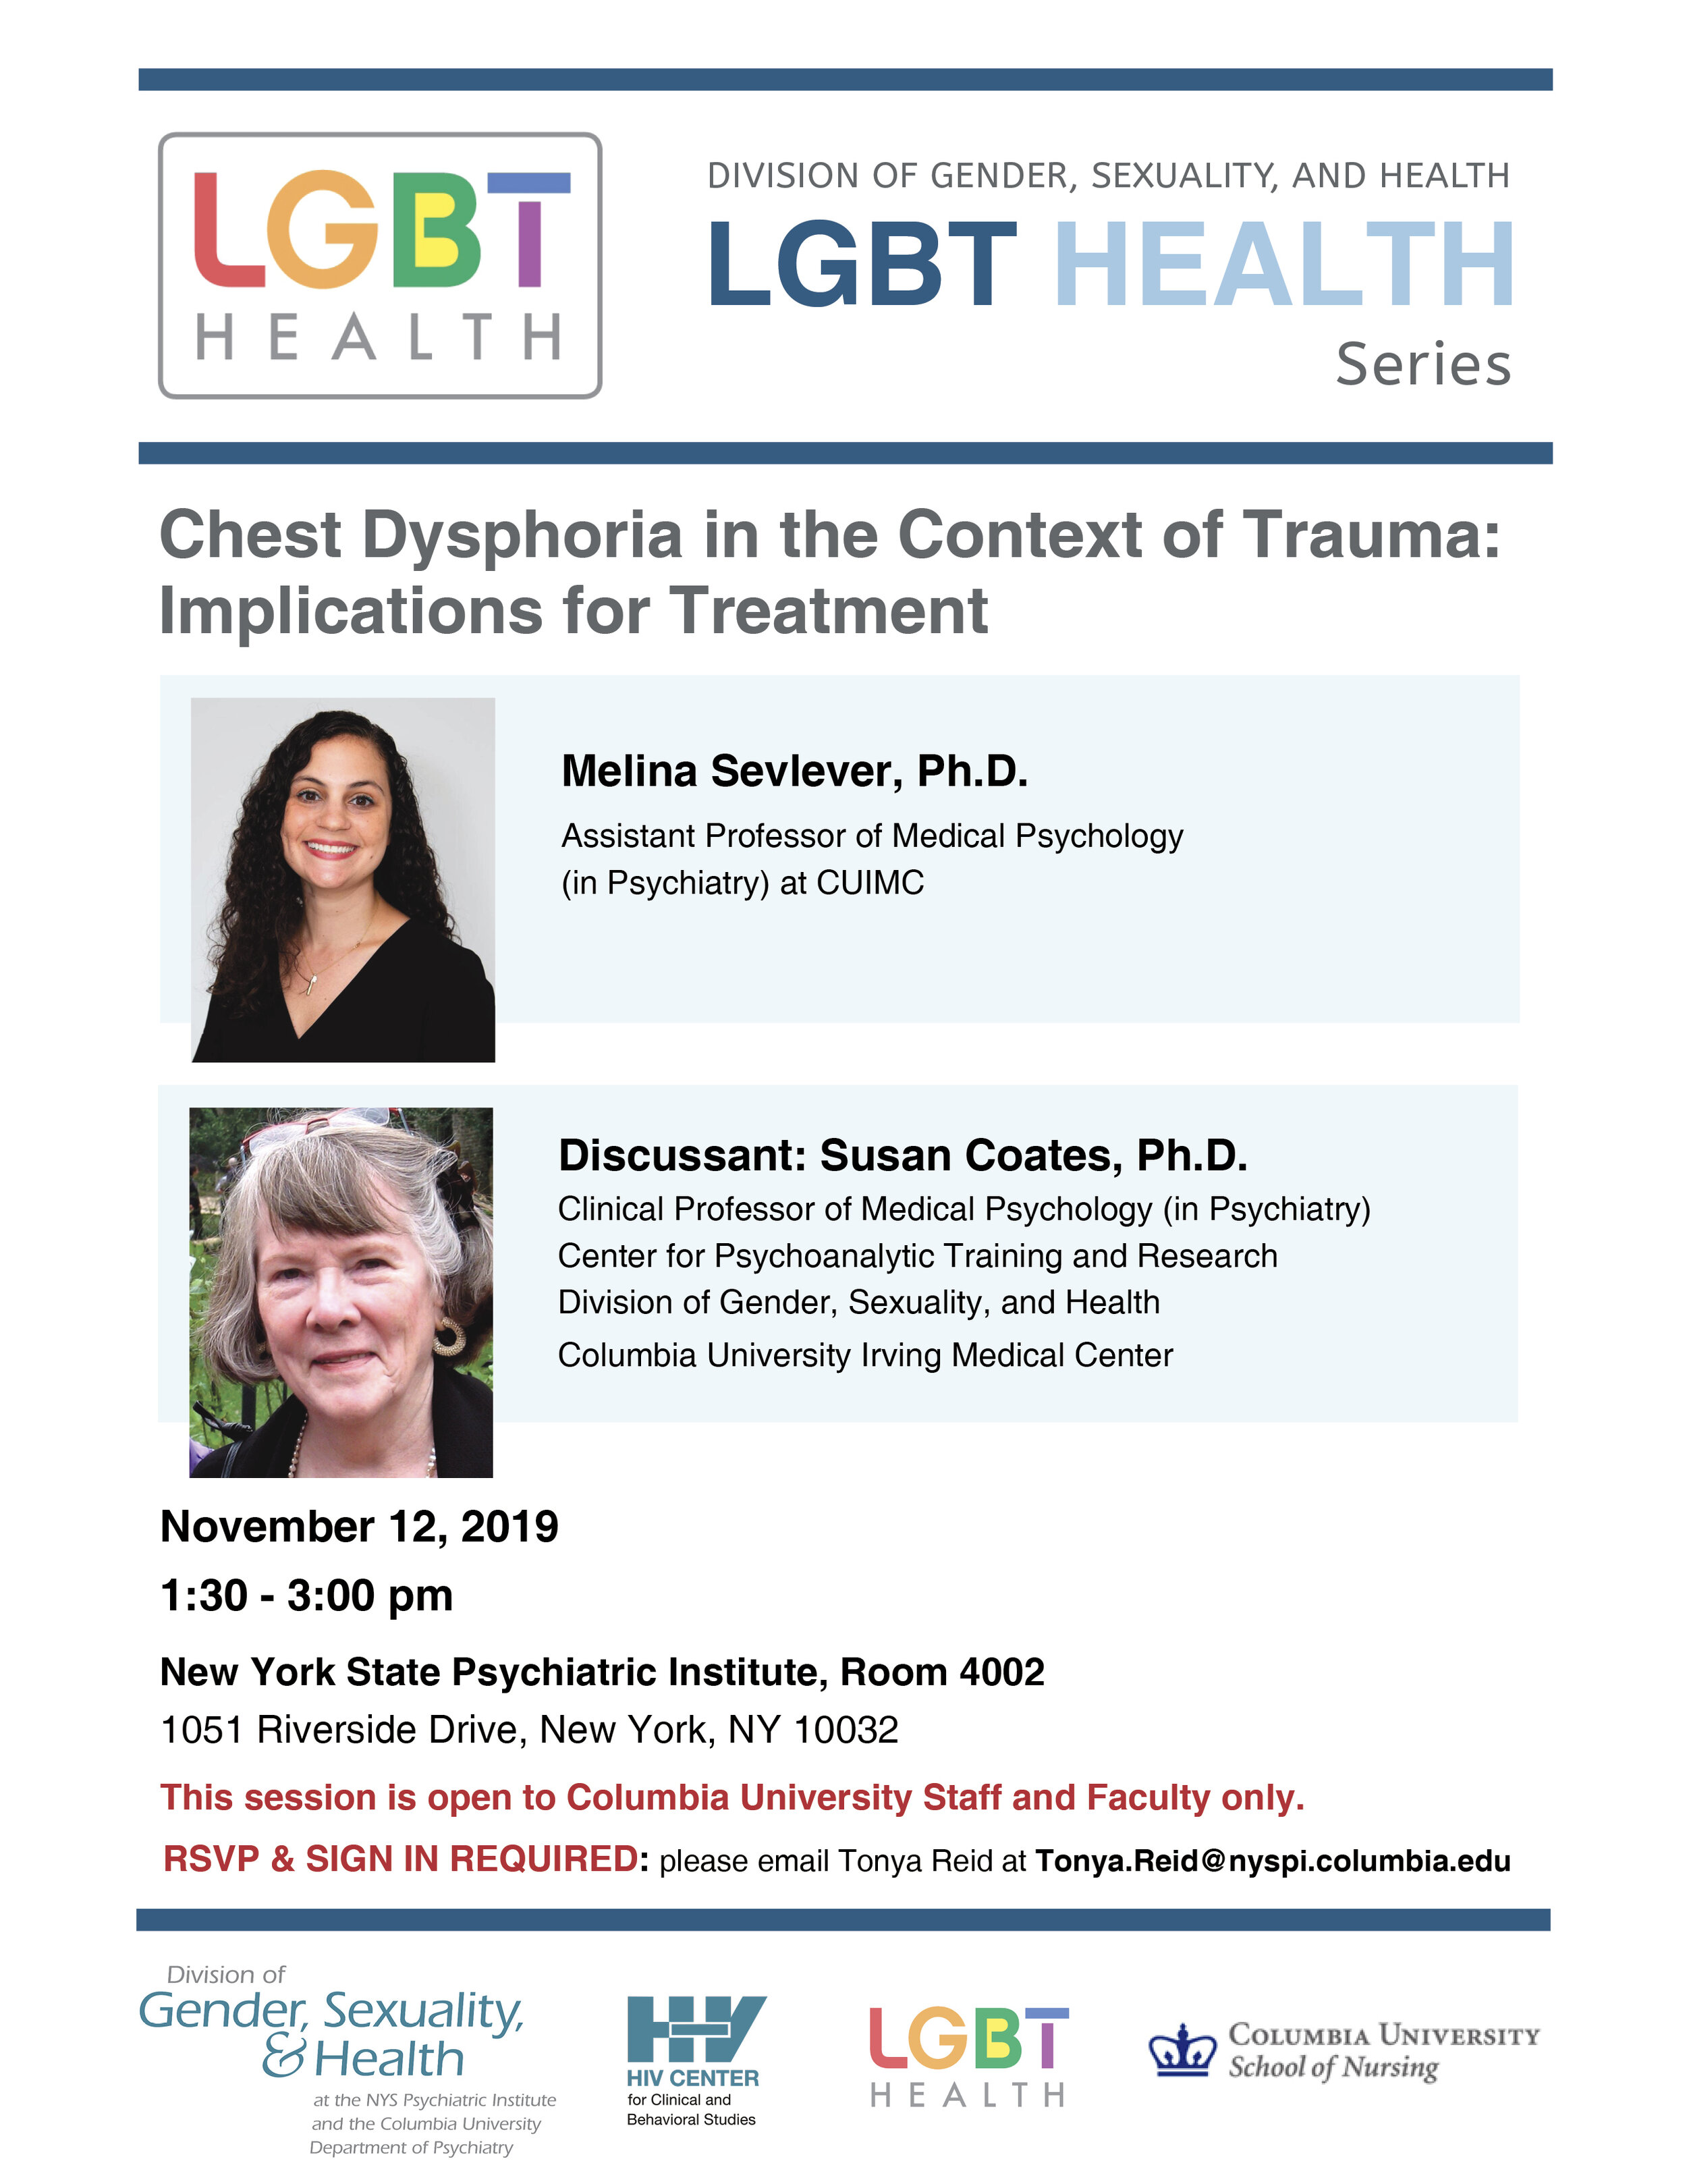 LGBT Health Series Nov 12 2019.jpg